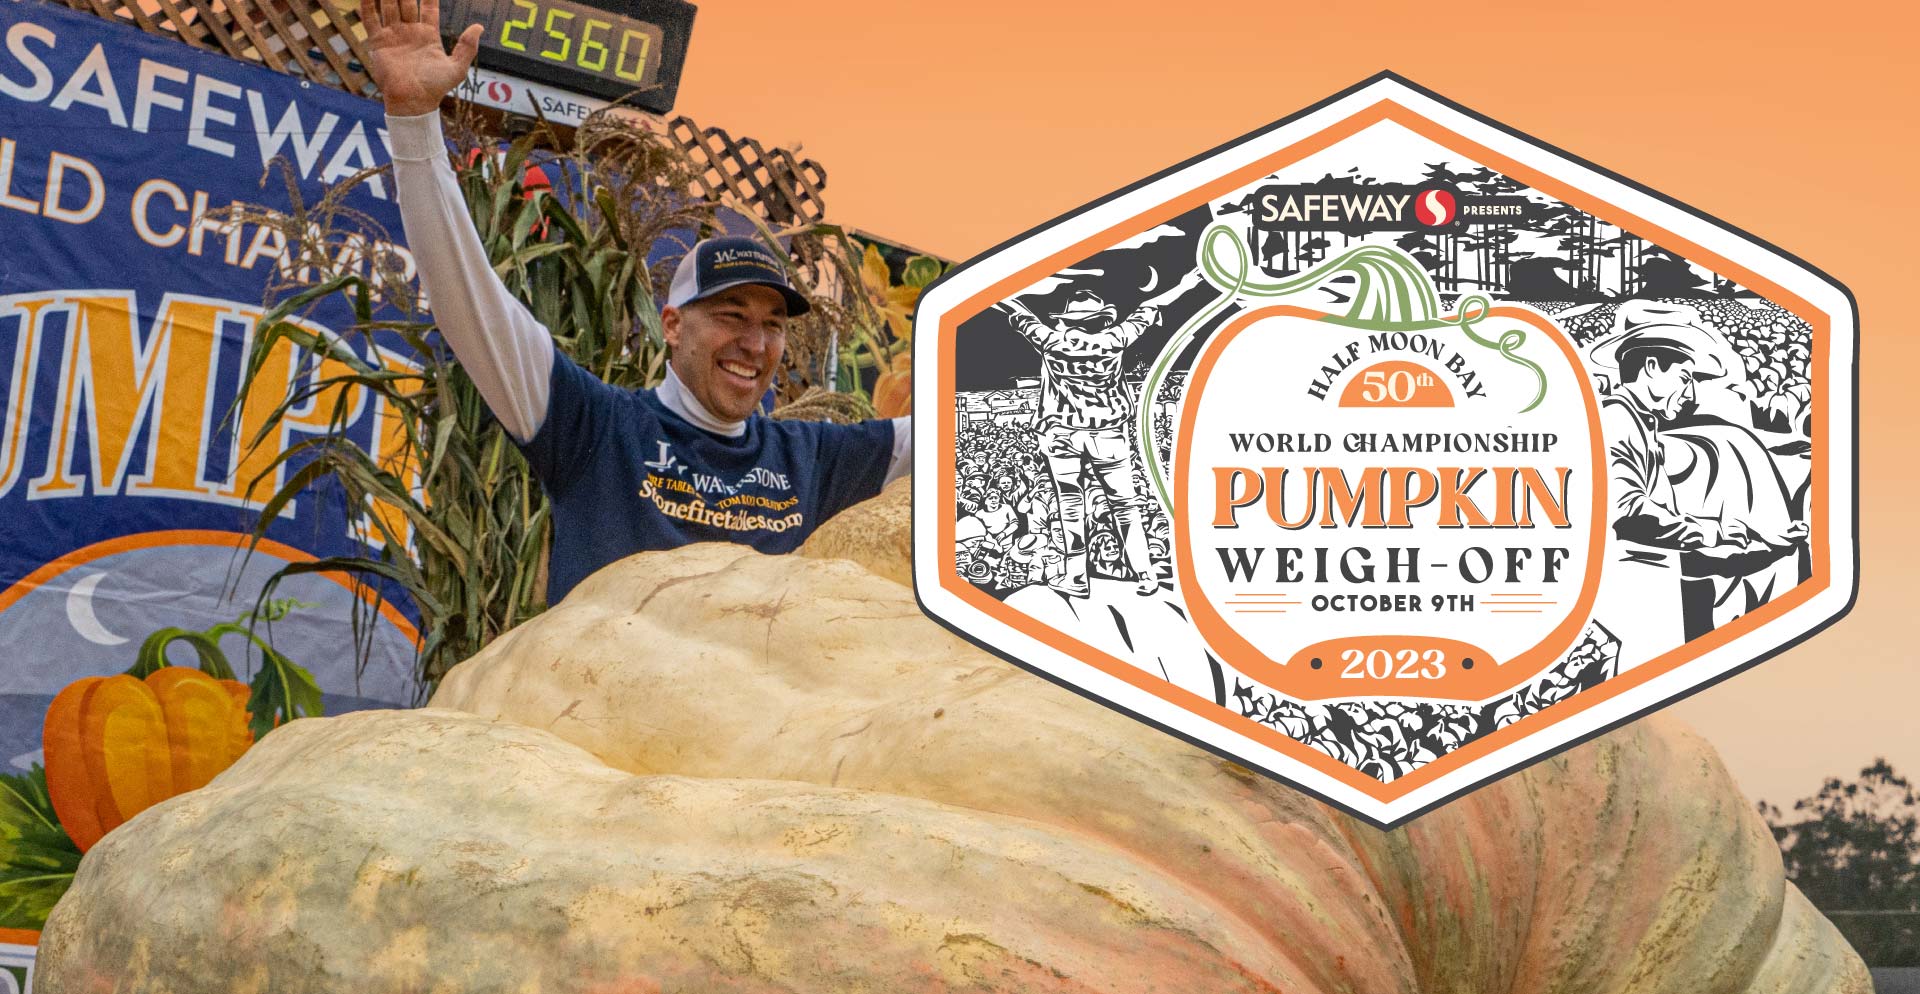 50th Annual Safeway World Championship Pumpkin Weigh-Off, October 9, 2023 in Half Moon Bay CA